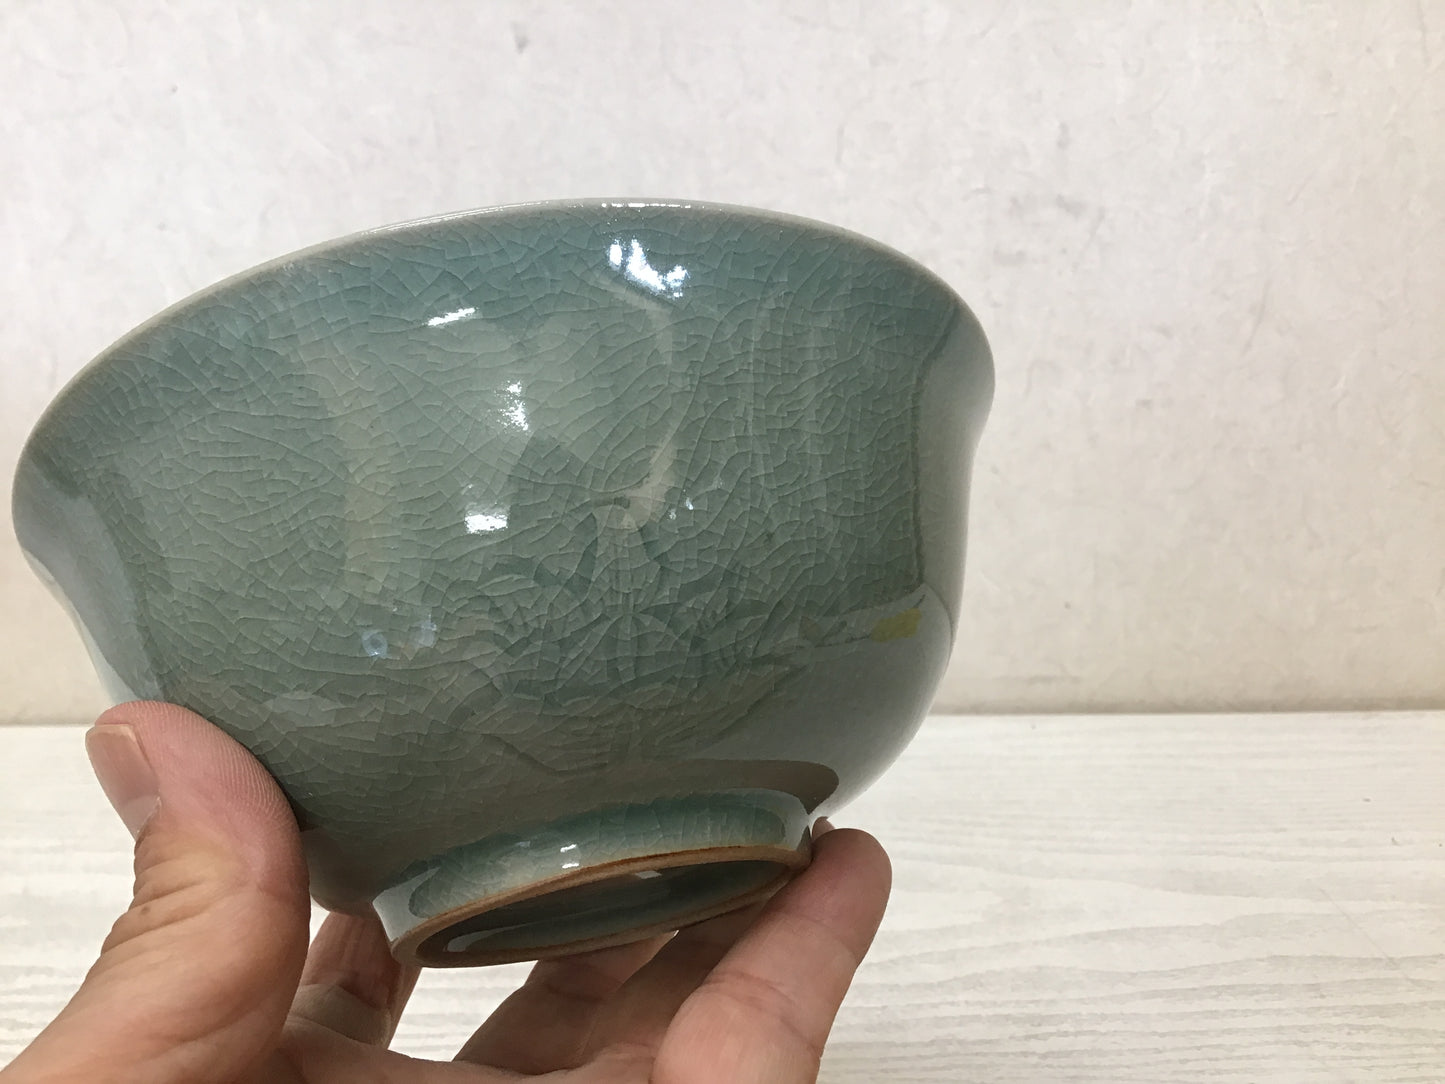 Y1690 CHAWAN Koryo celadon signed box Korean bowl pottery Korea tea ceremony